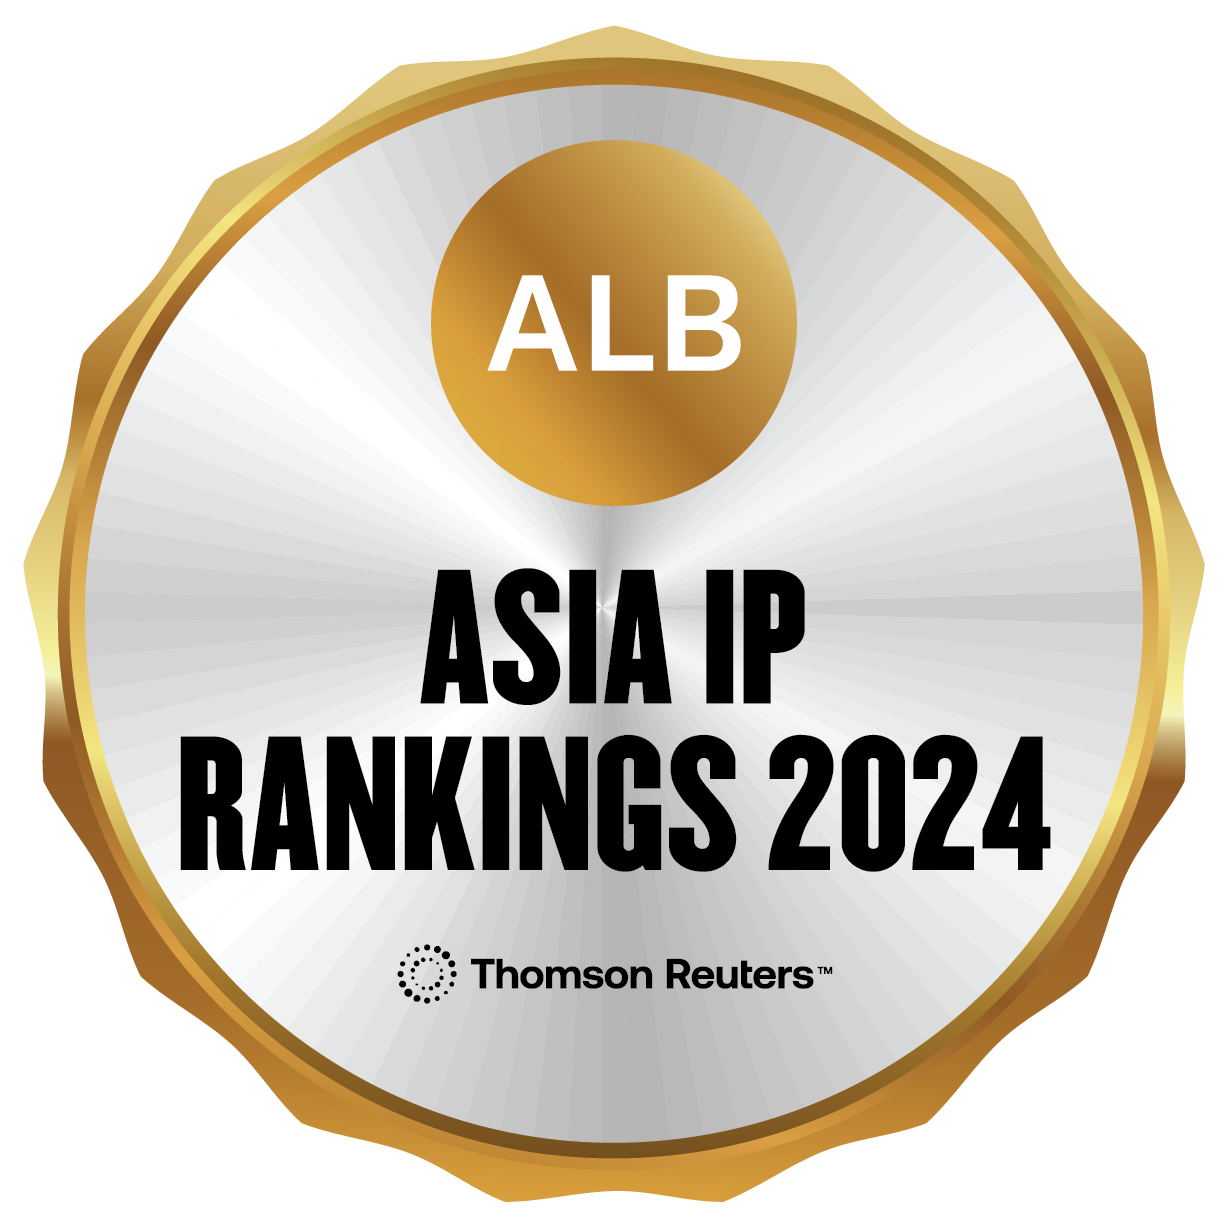 Asia IP Rankings 2024 ALB Badge - Intellectual Property Trademarks Copyright Patent